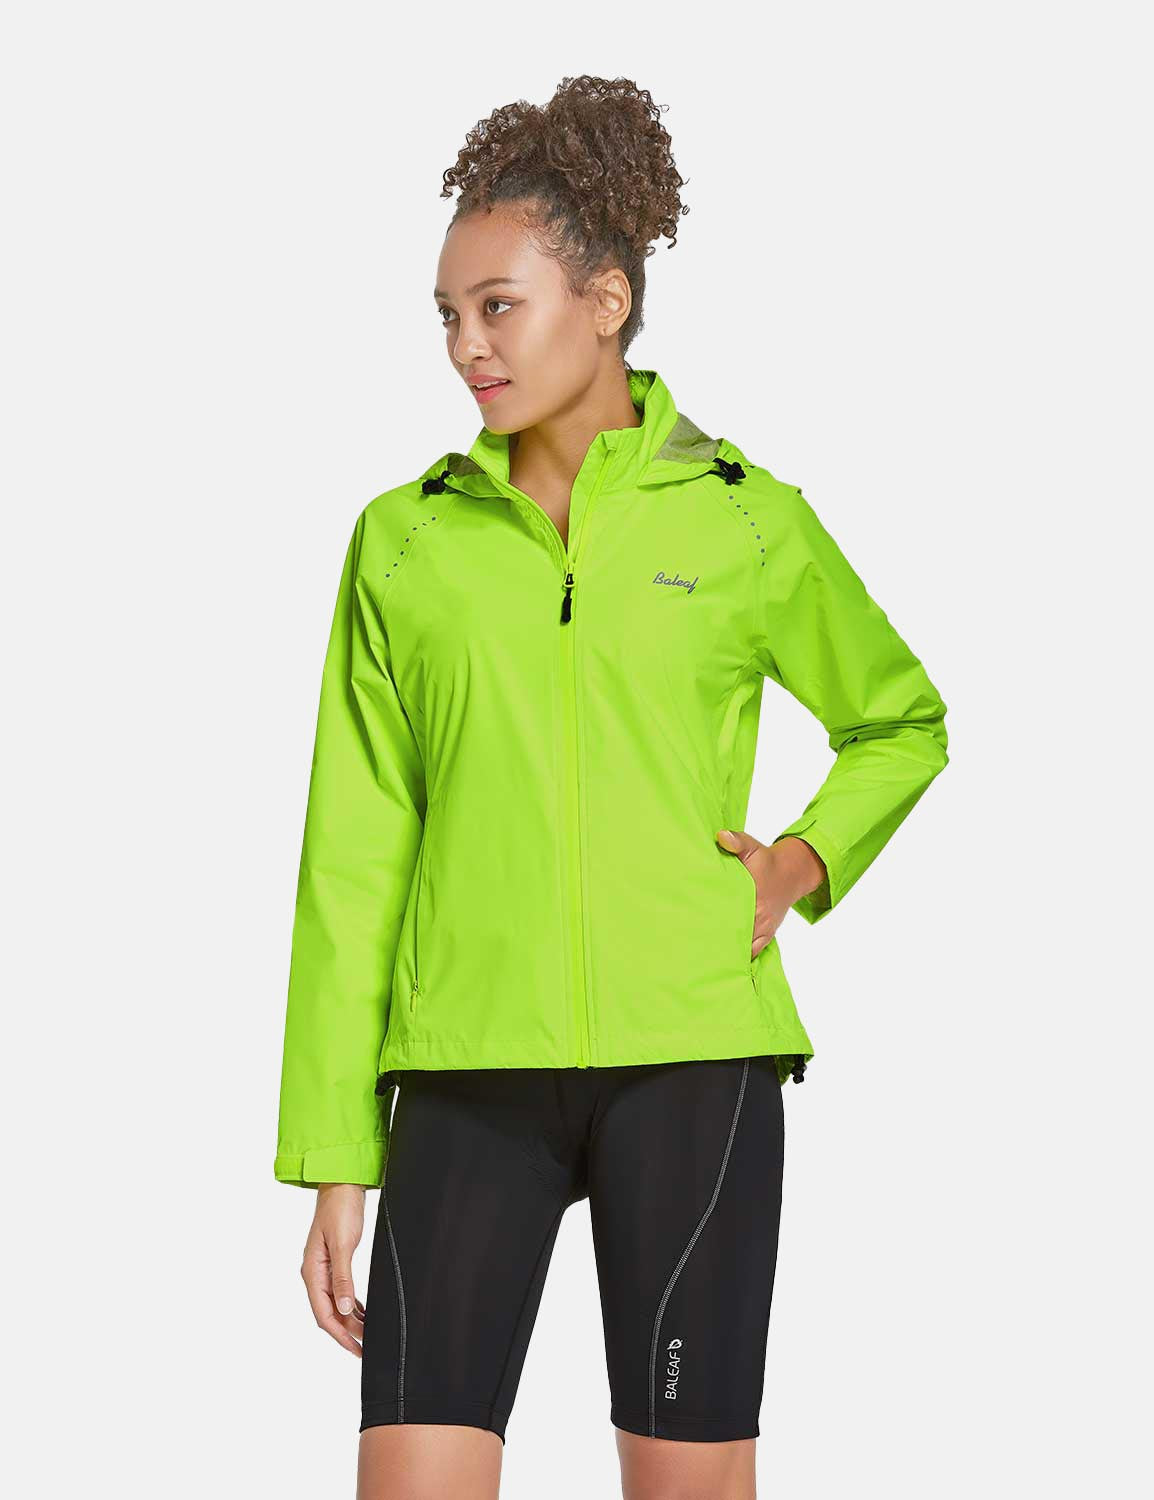 Baleaf Women's Waterproof Lightweight Full-Zip Pocketed Cycling Jacket aaa468 Fluorescent Yellow Side